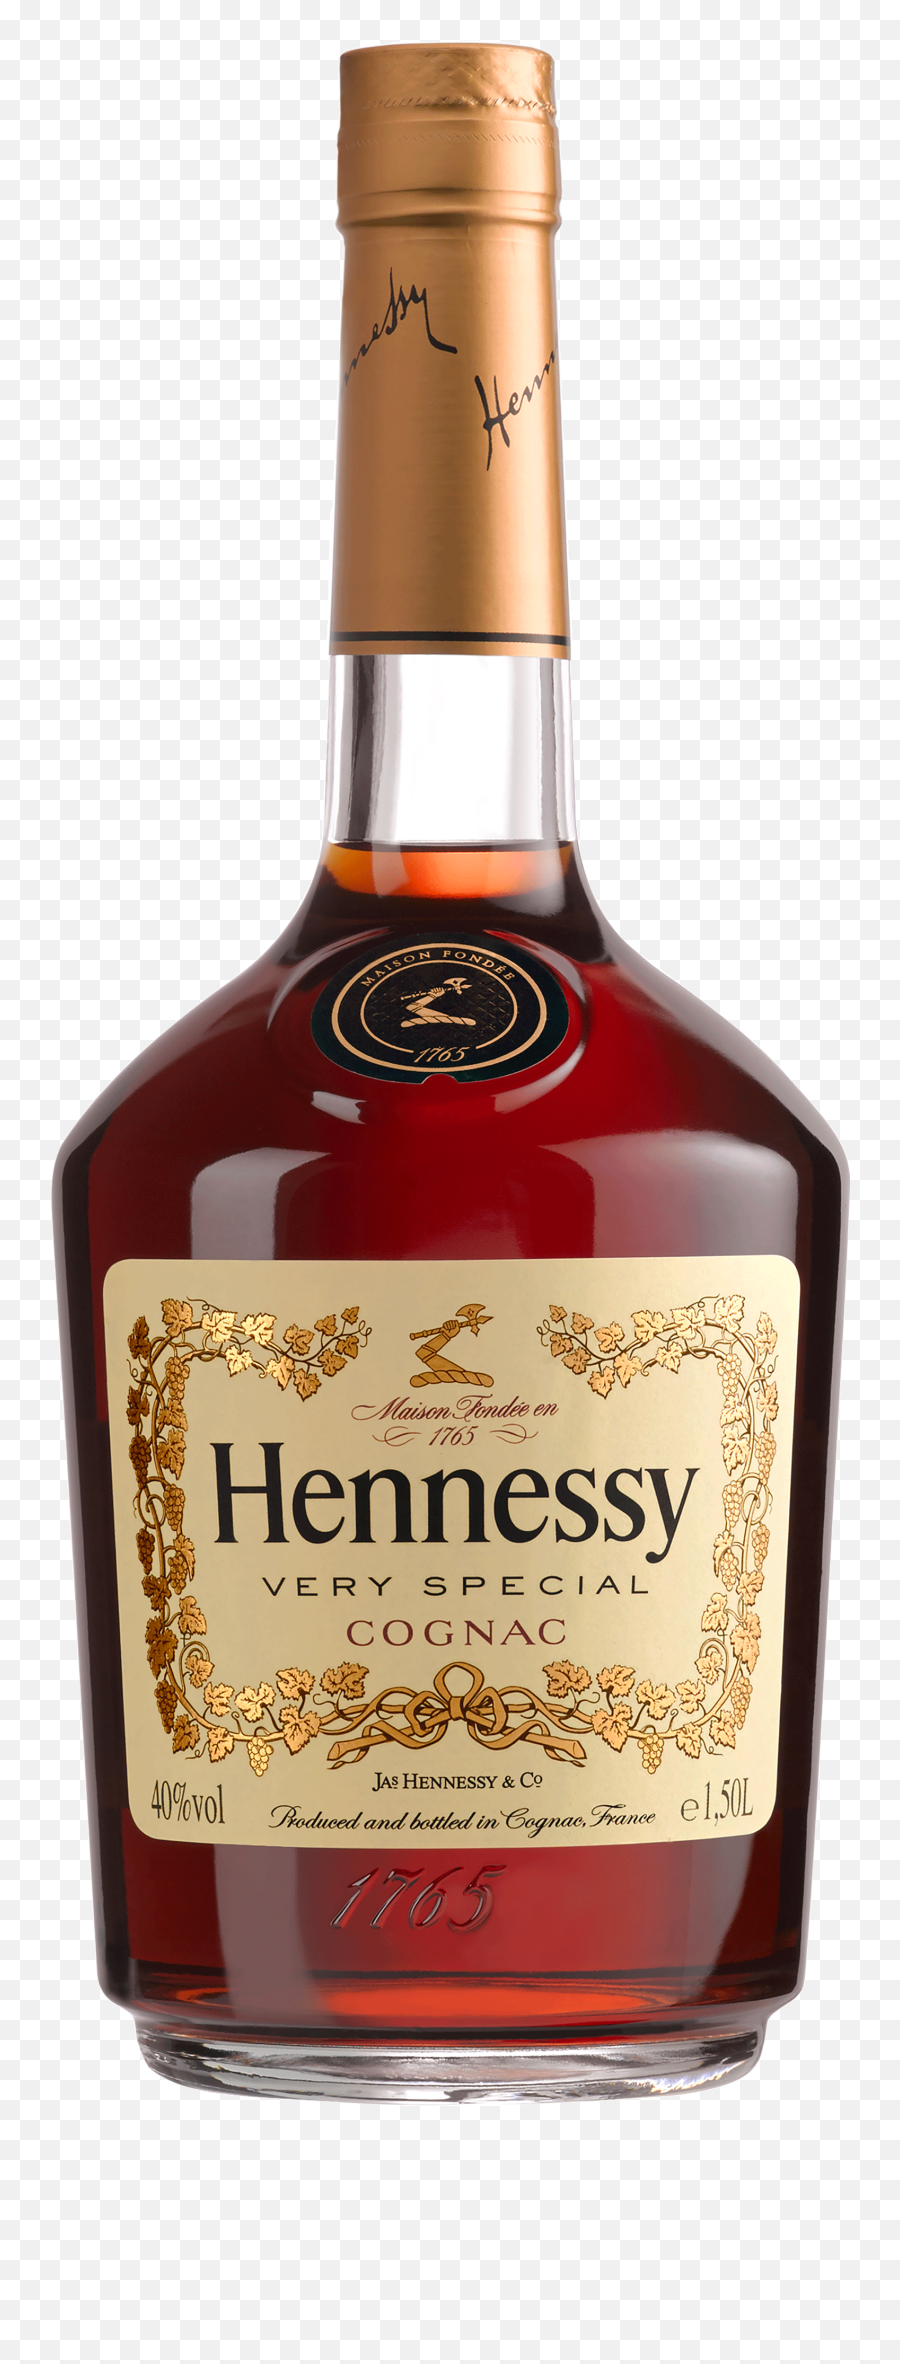 Hennessy Bottle Png For Free Download - Hennessy Vs,Hennessy Bottle Png